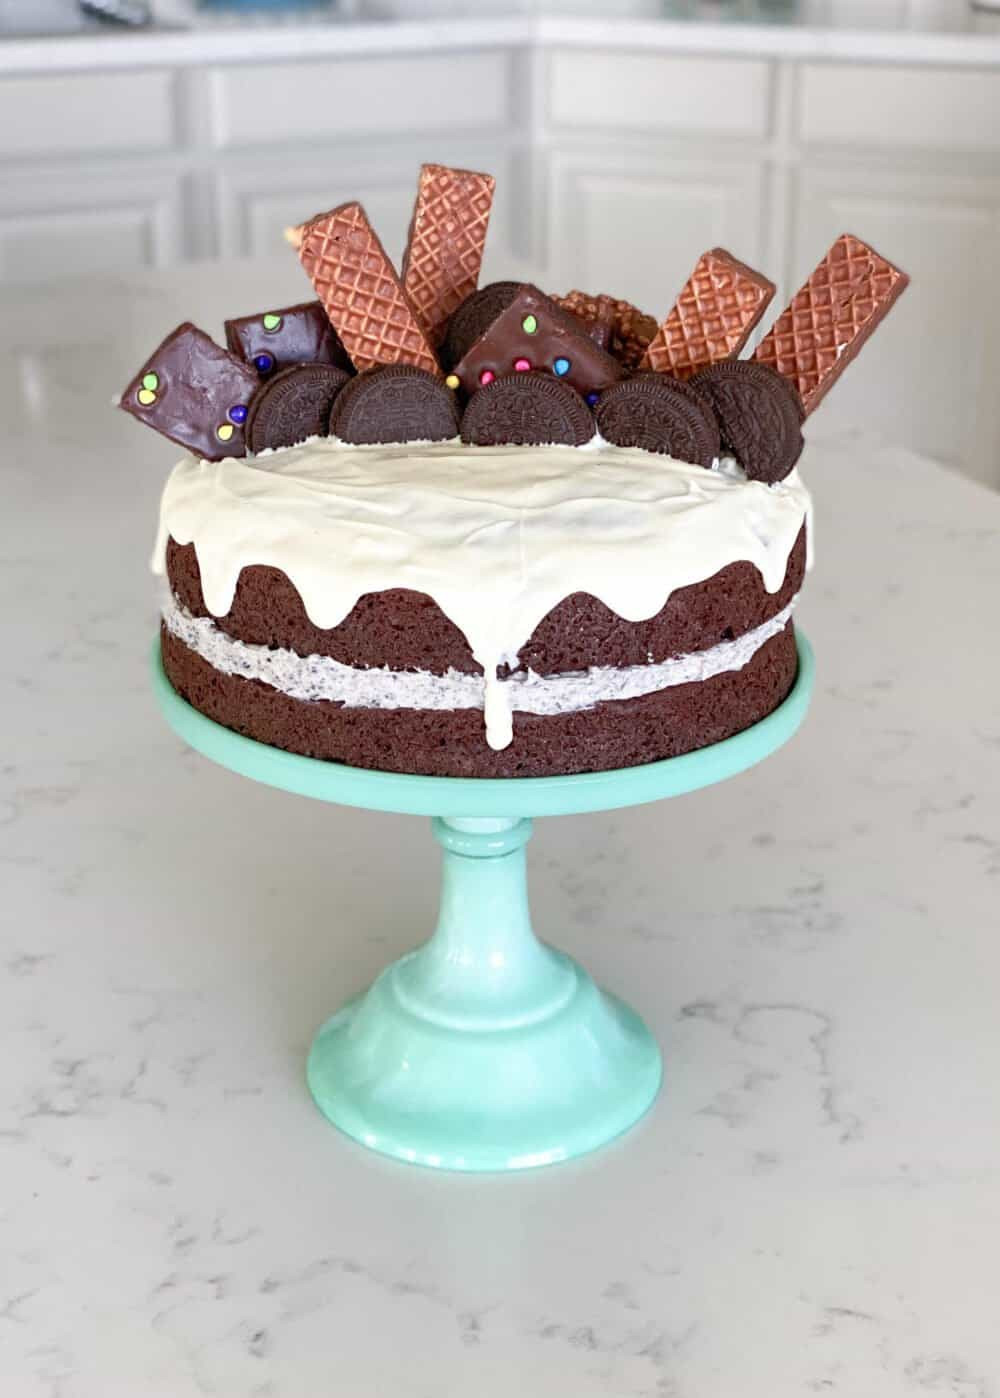 Pictures Of Birthday Cakes
 A Very Happy Birthday Cake Recipe